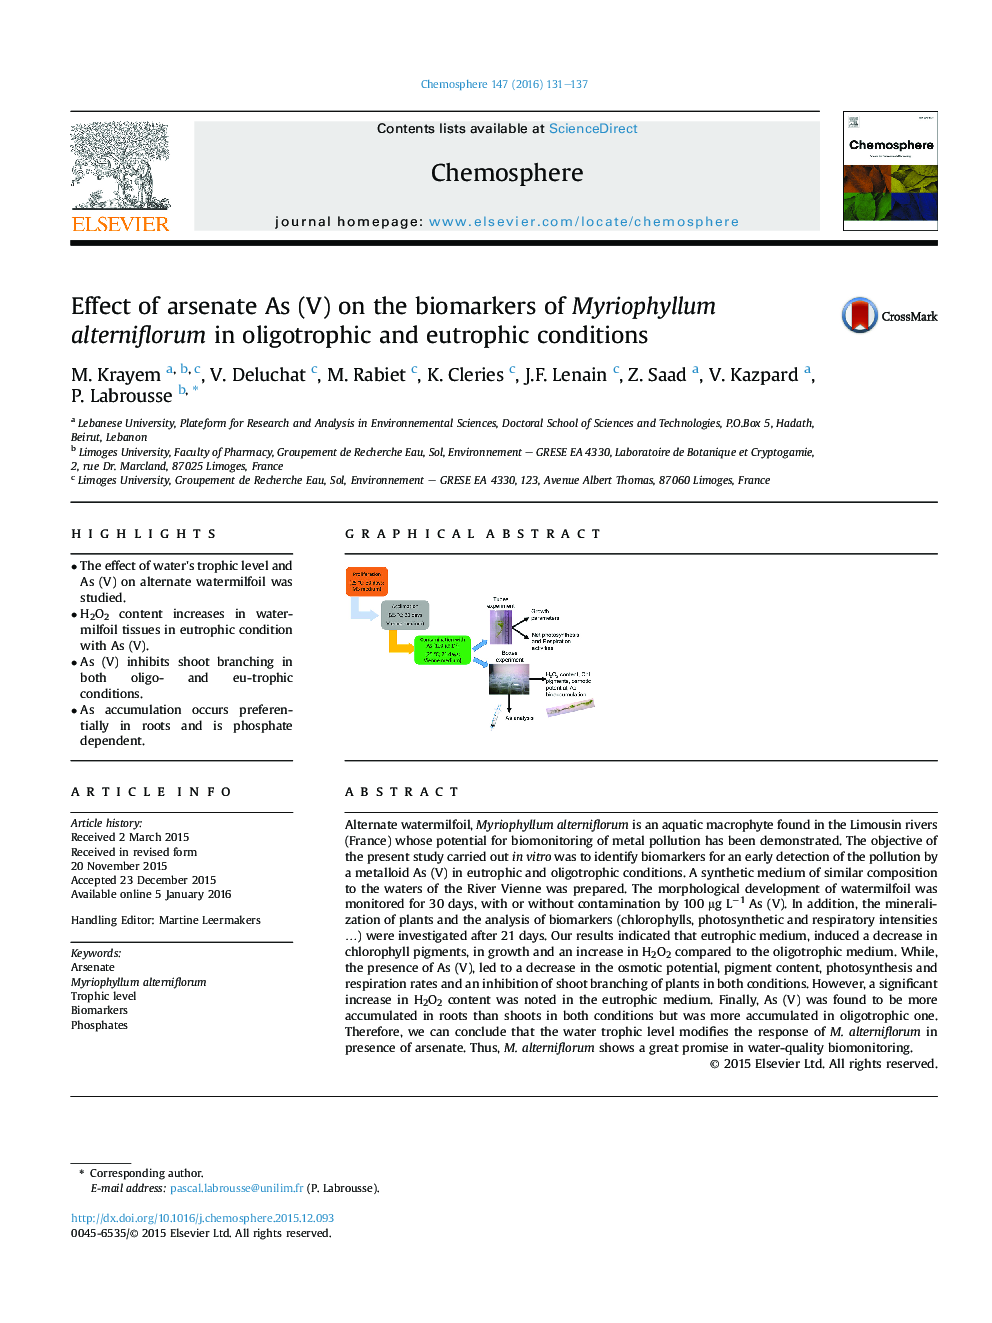 Effect of arsenate As (V) on the biomarkers of Myriophyllum alterniflorum in oligotrophic and eutrophic conditions